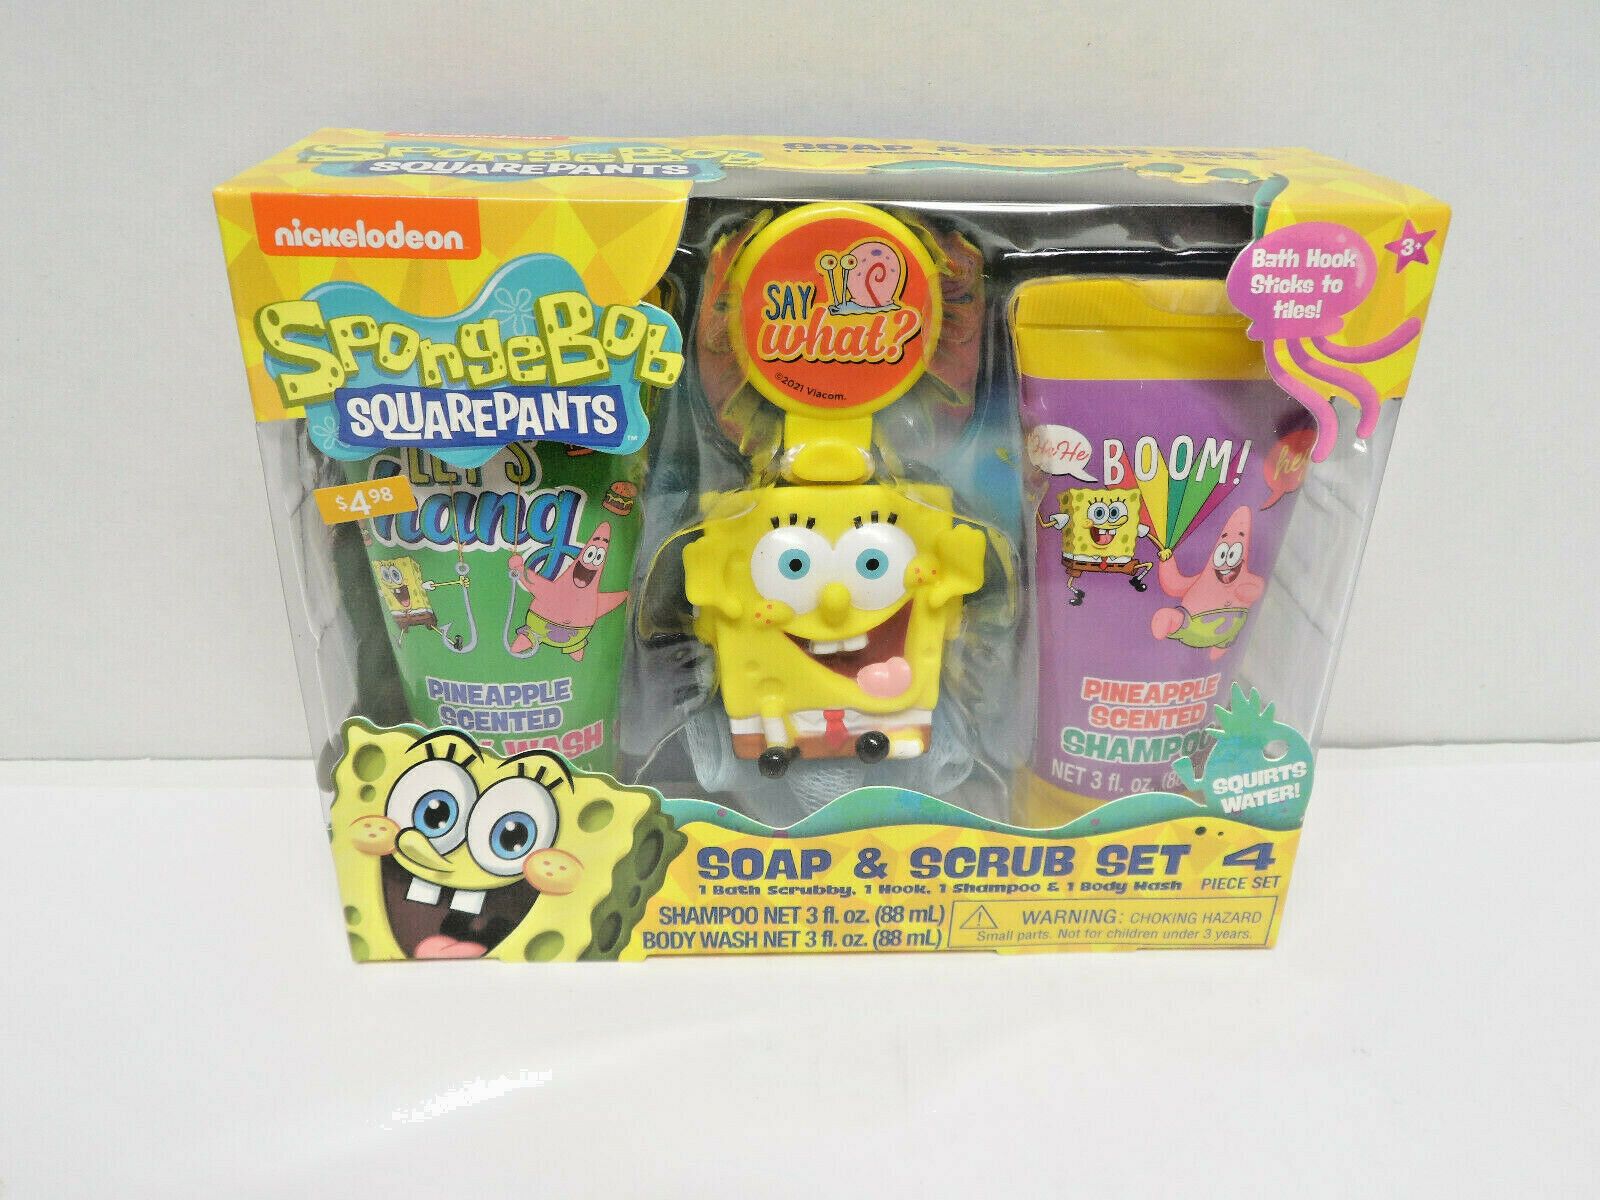 Sponge Bob Squarepants Nickelodeon Soap & Scrub Shampoo & Body Wash 4 Piece Set